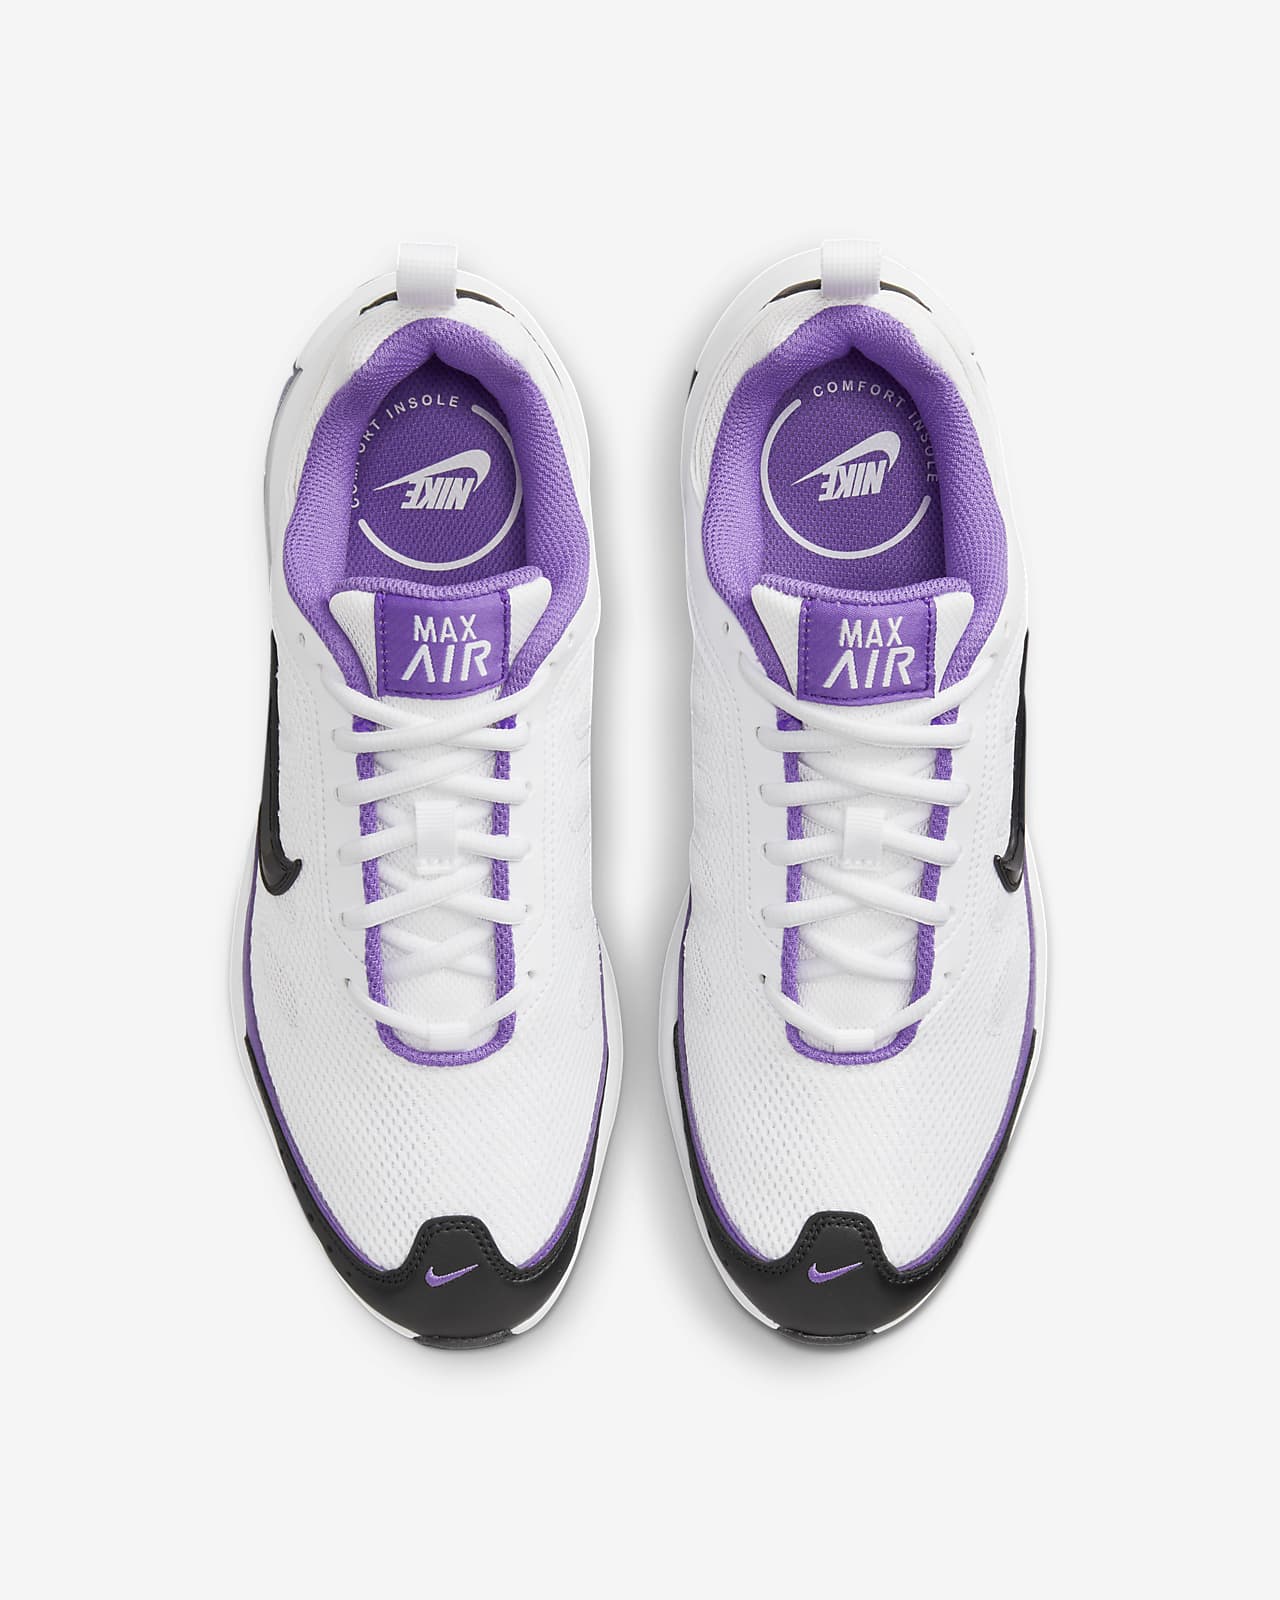 Parra x Nike Air Max 1 On Feet Sneaker Review